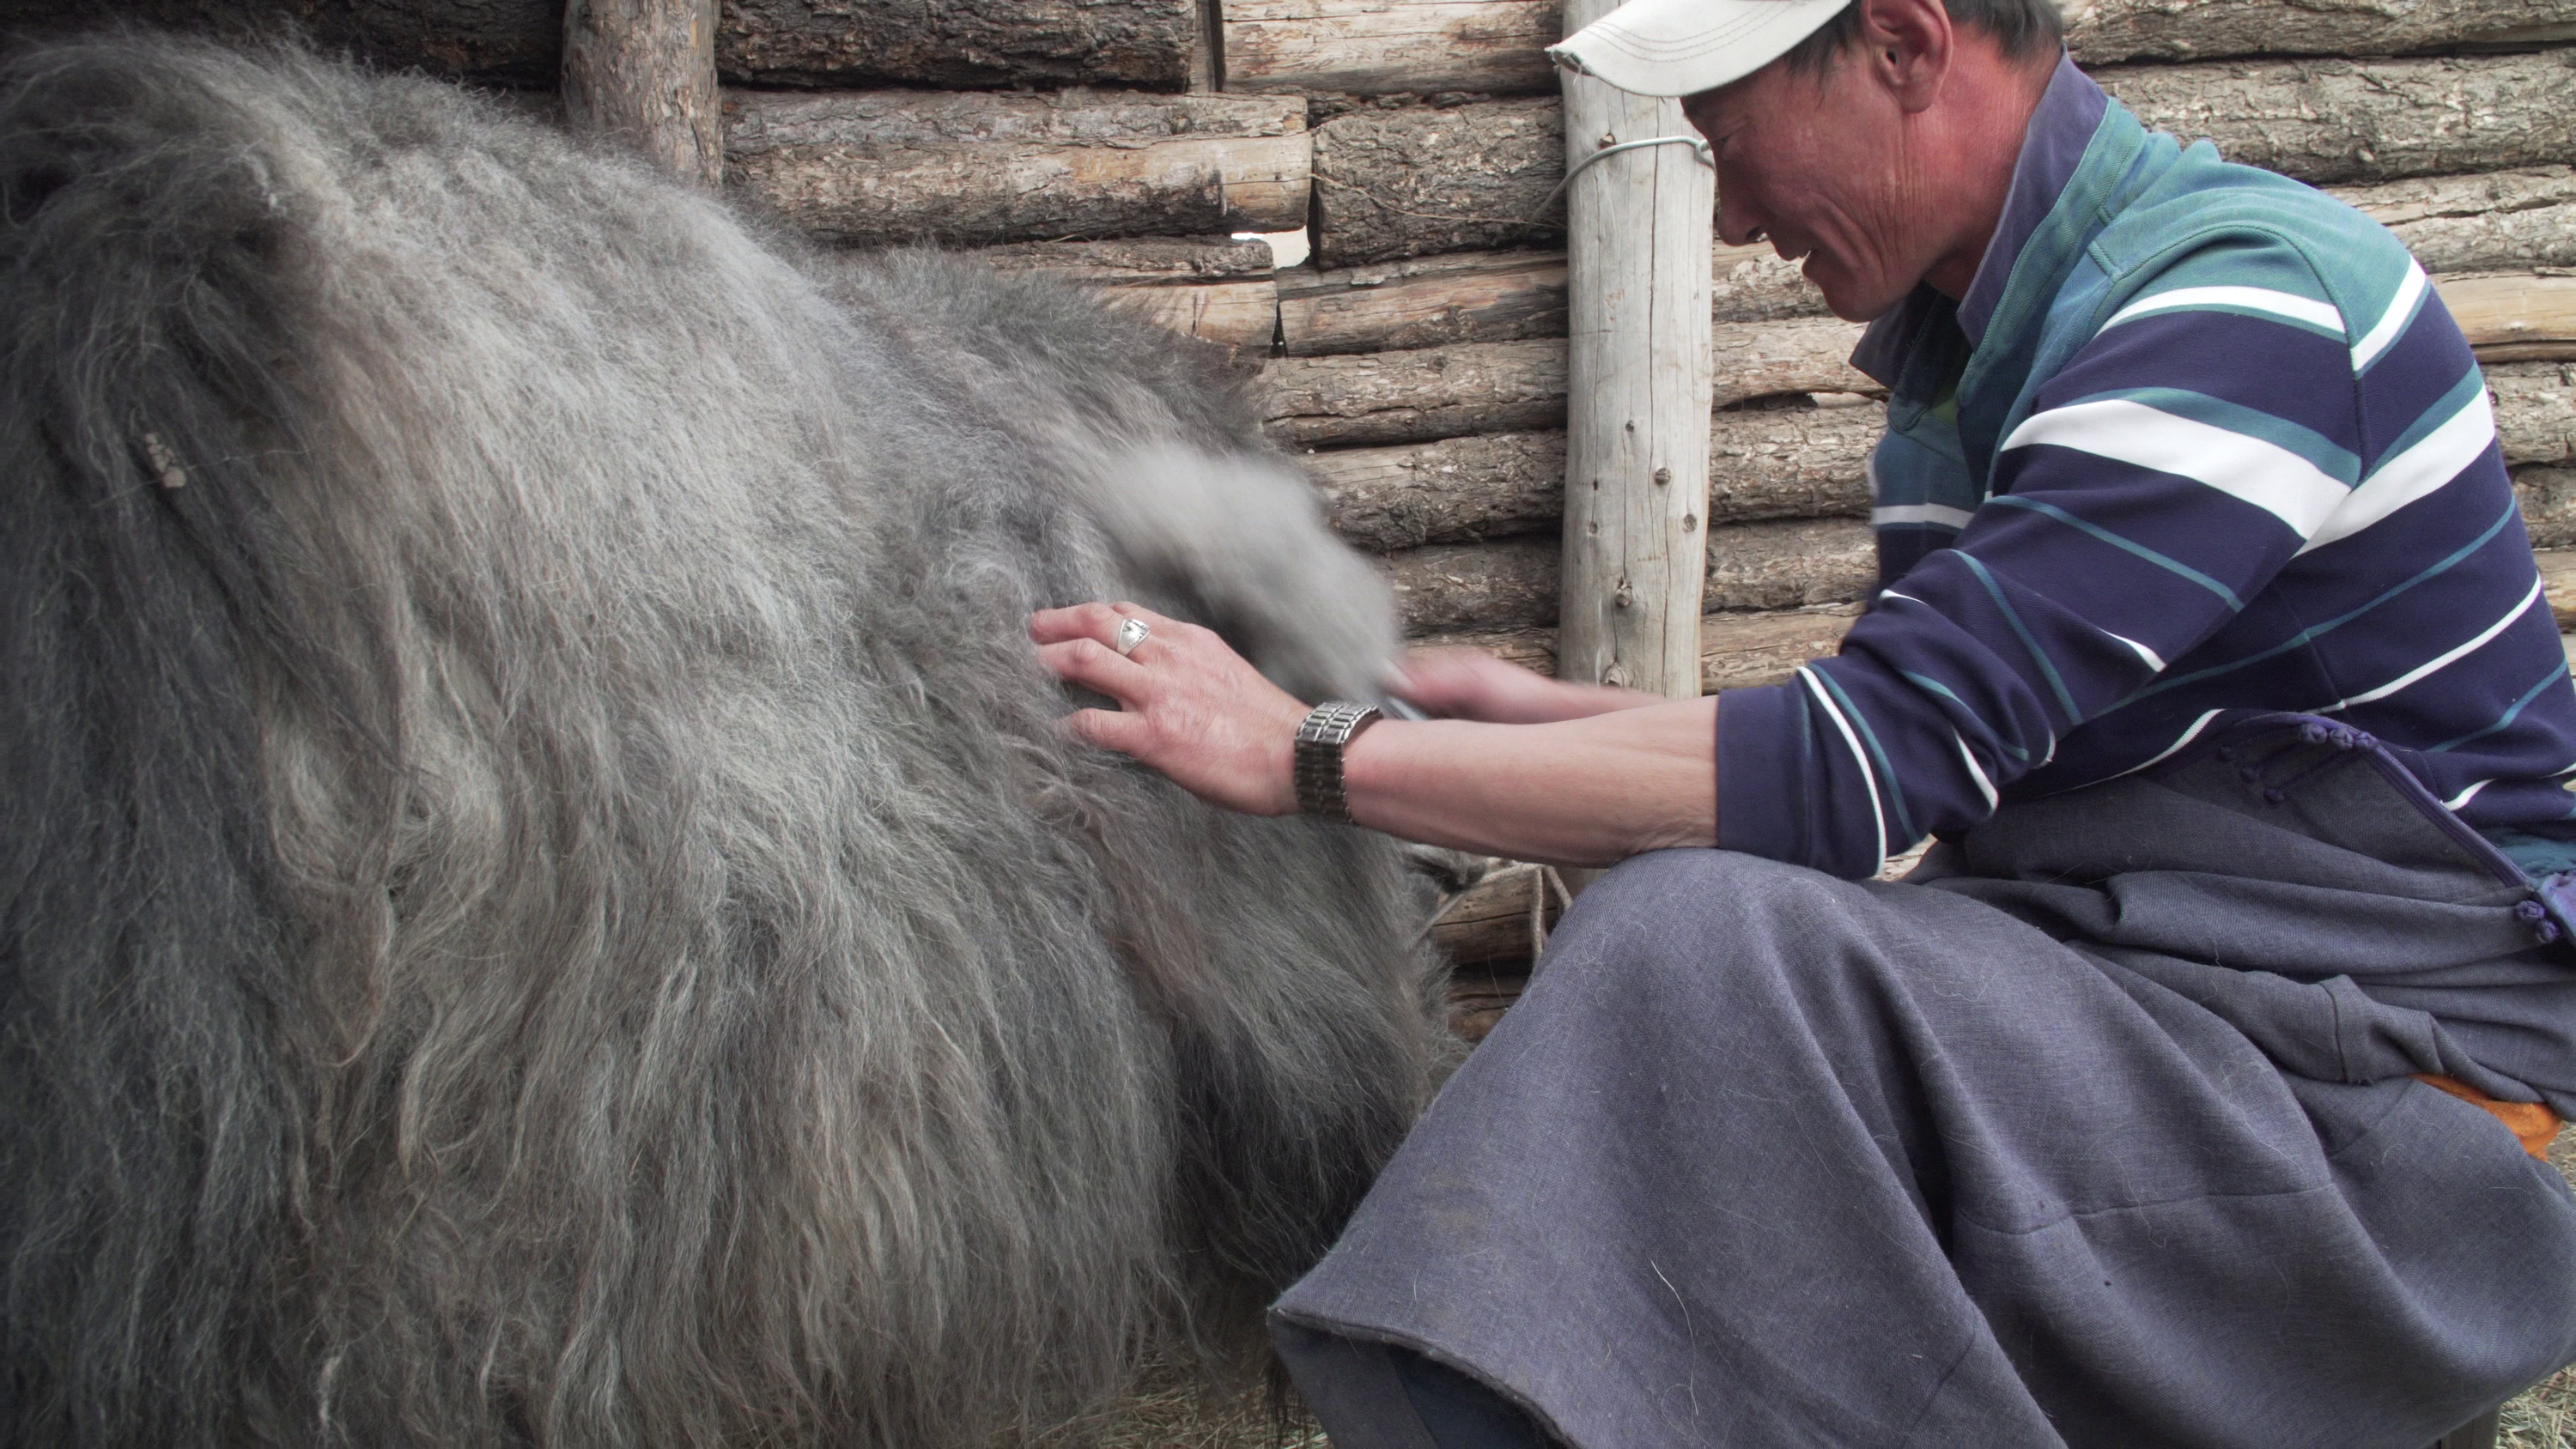 Herder brushing a yak